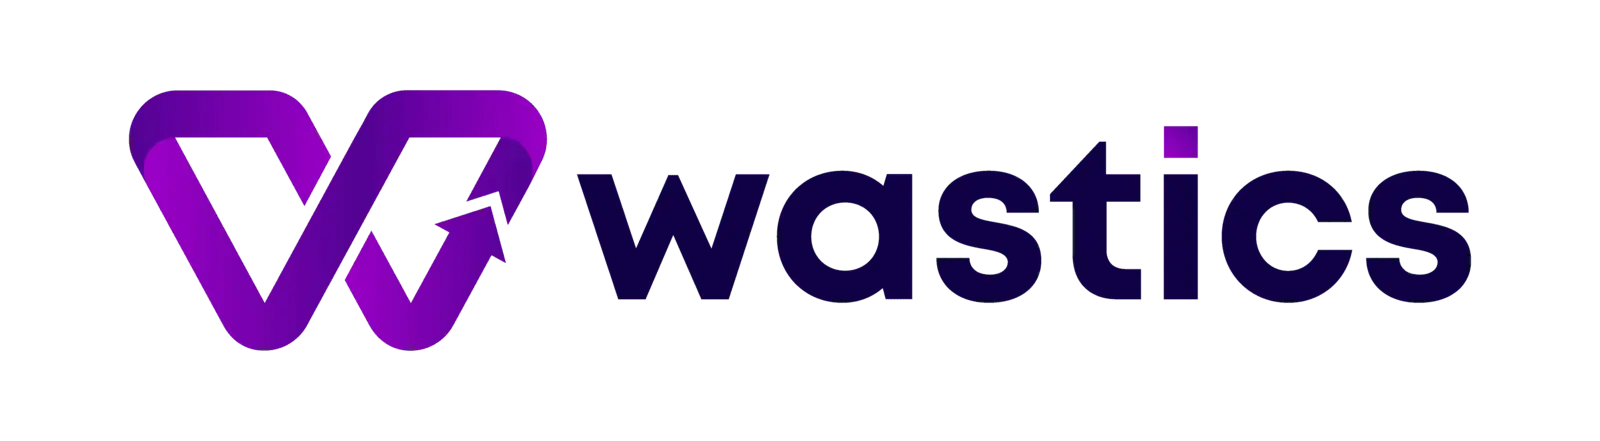 wastics logo